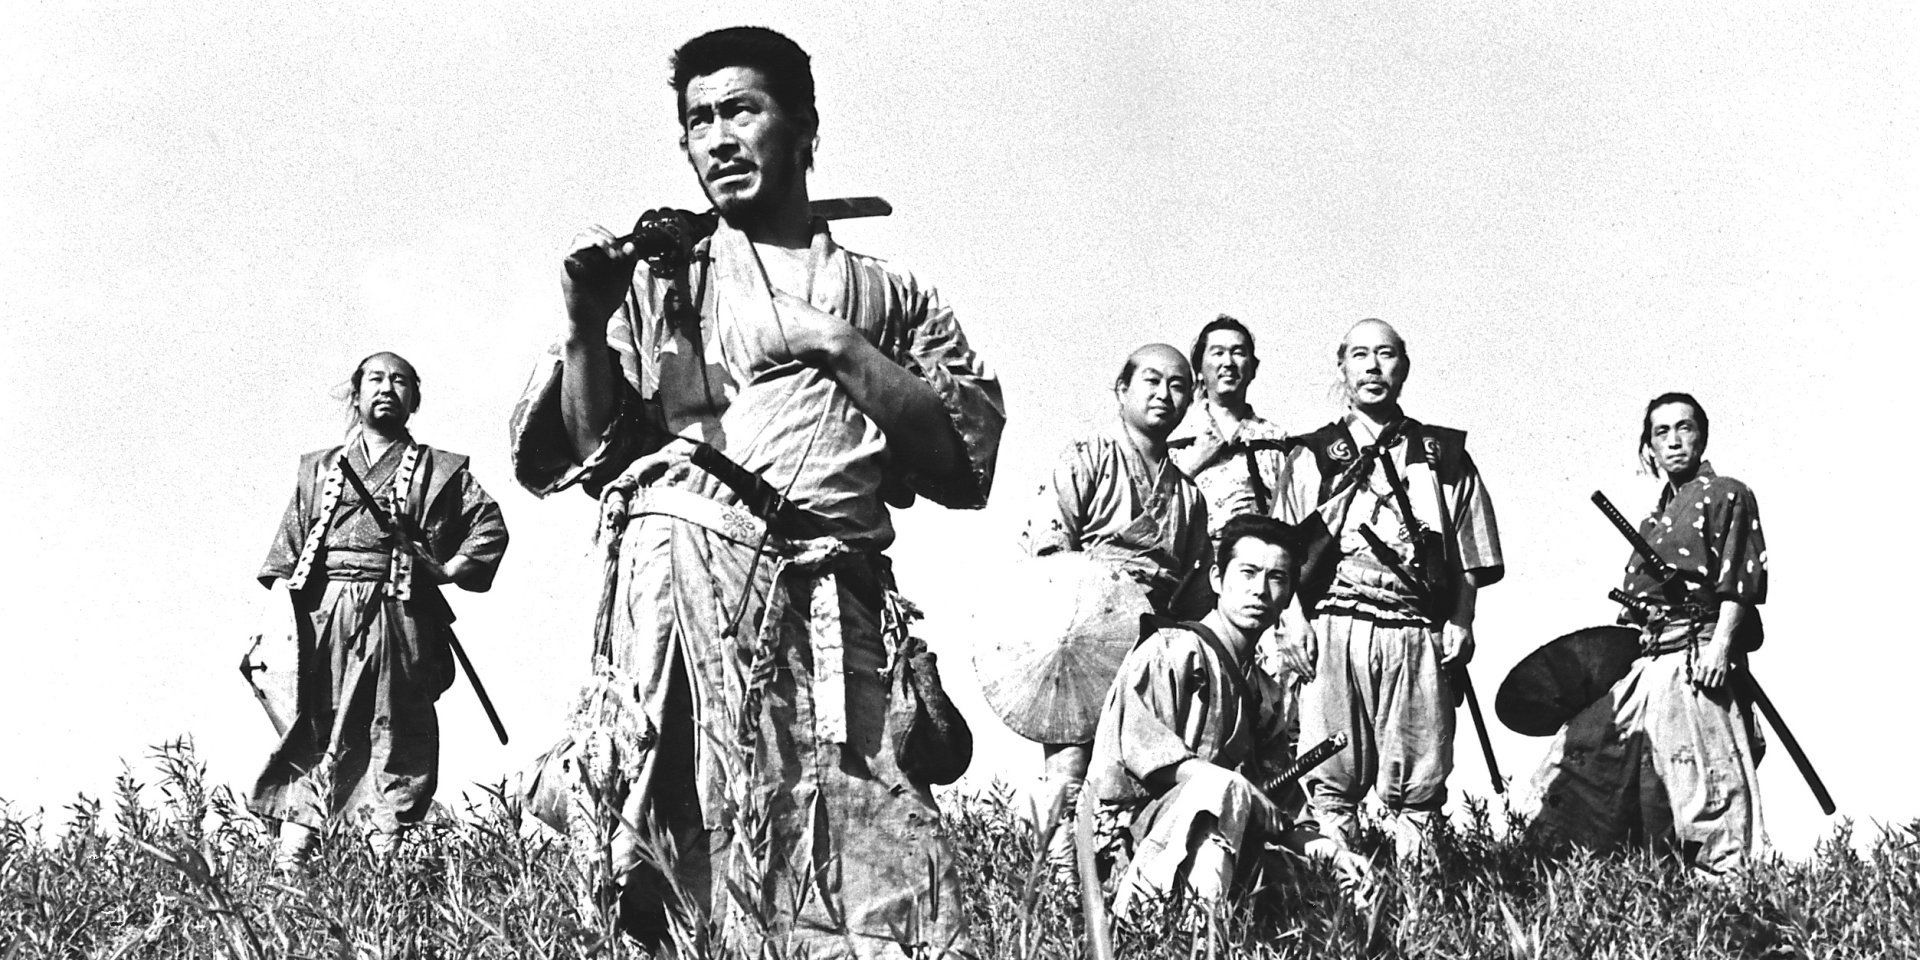 The main characters from Akira Kurosawa's film Seven Samurai